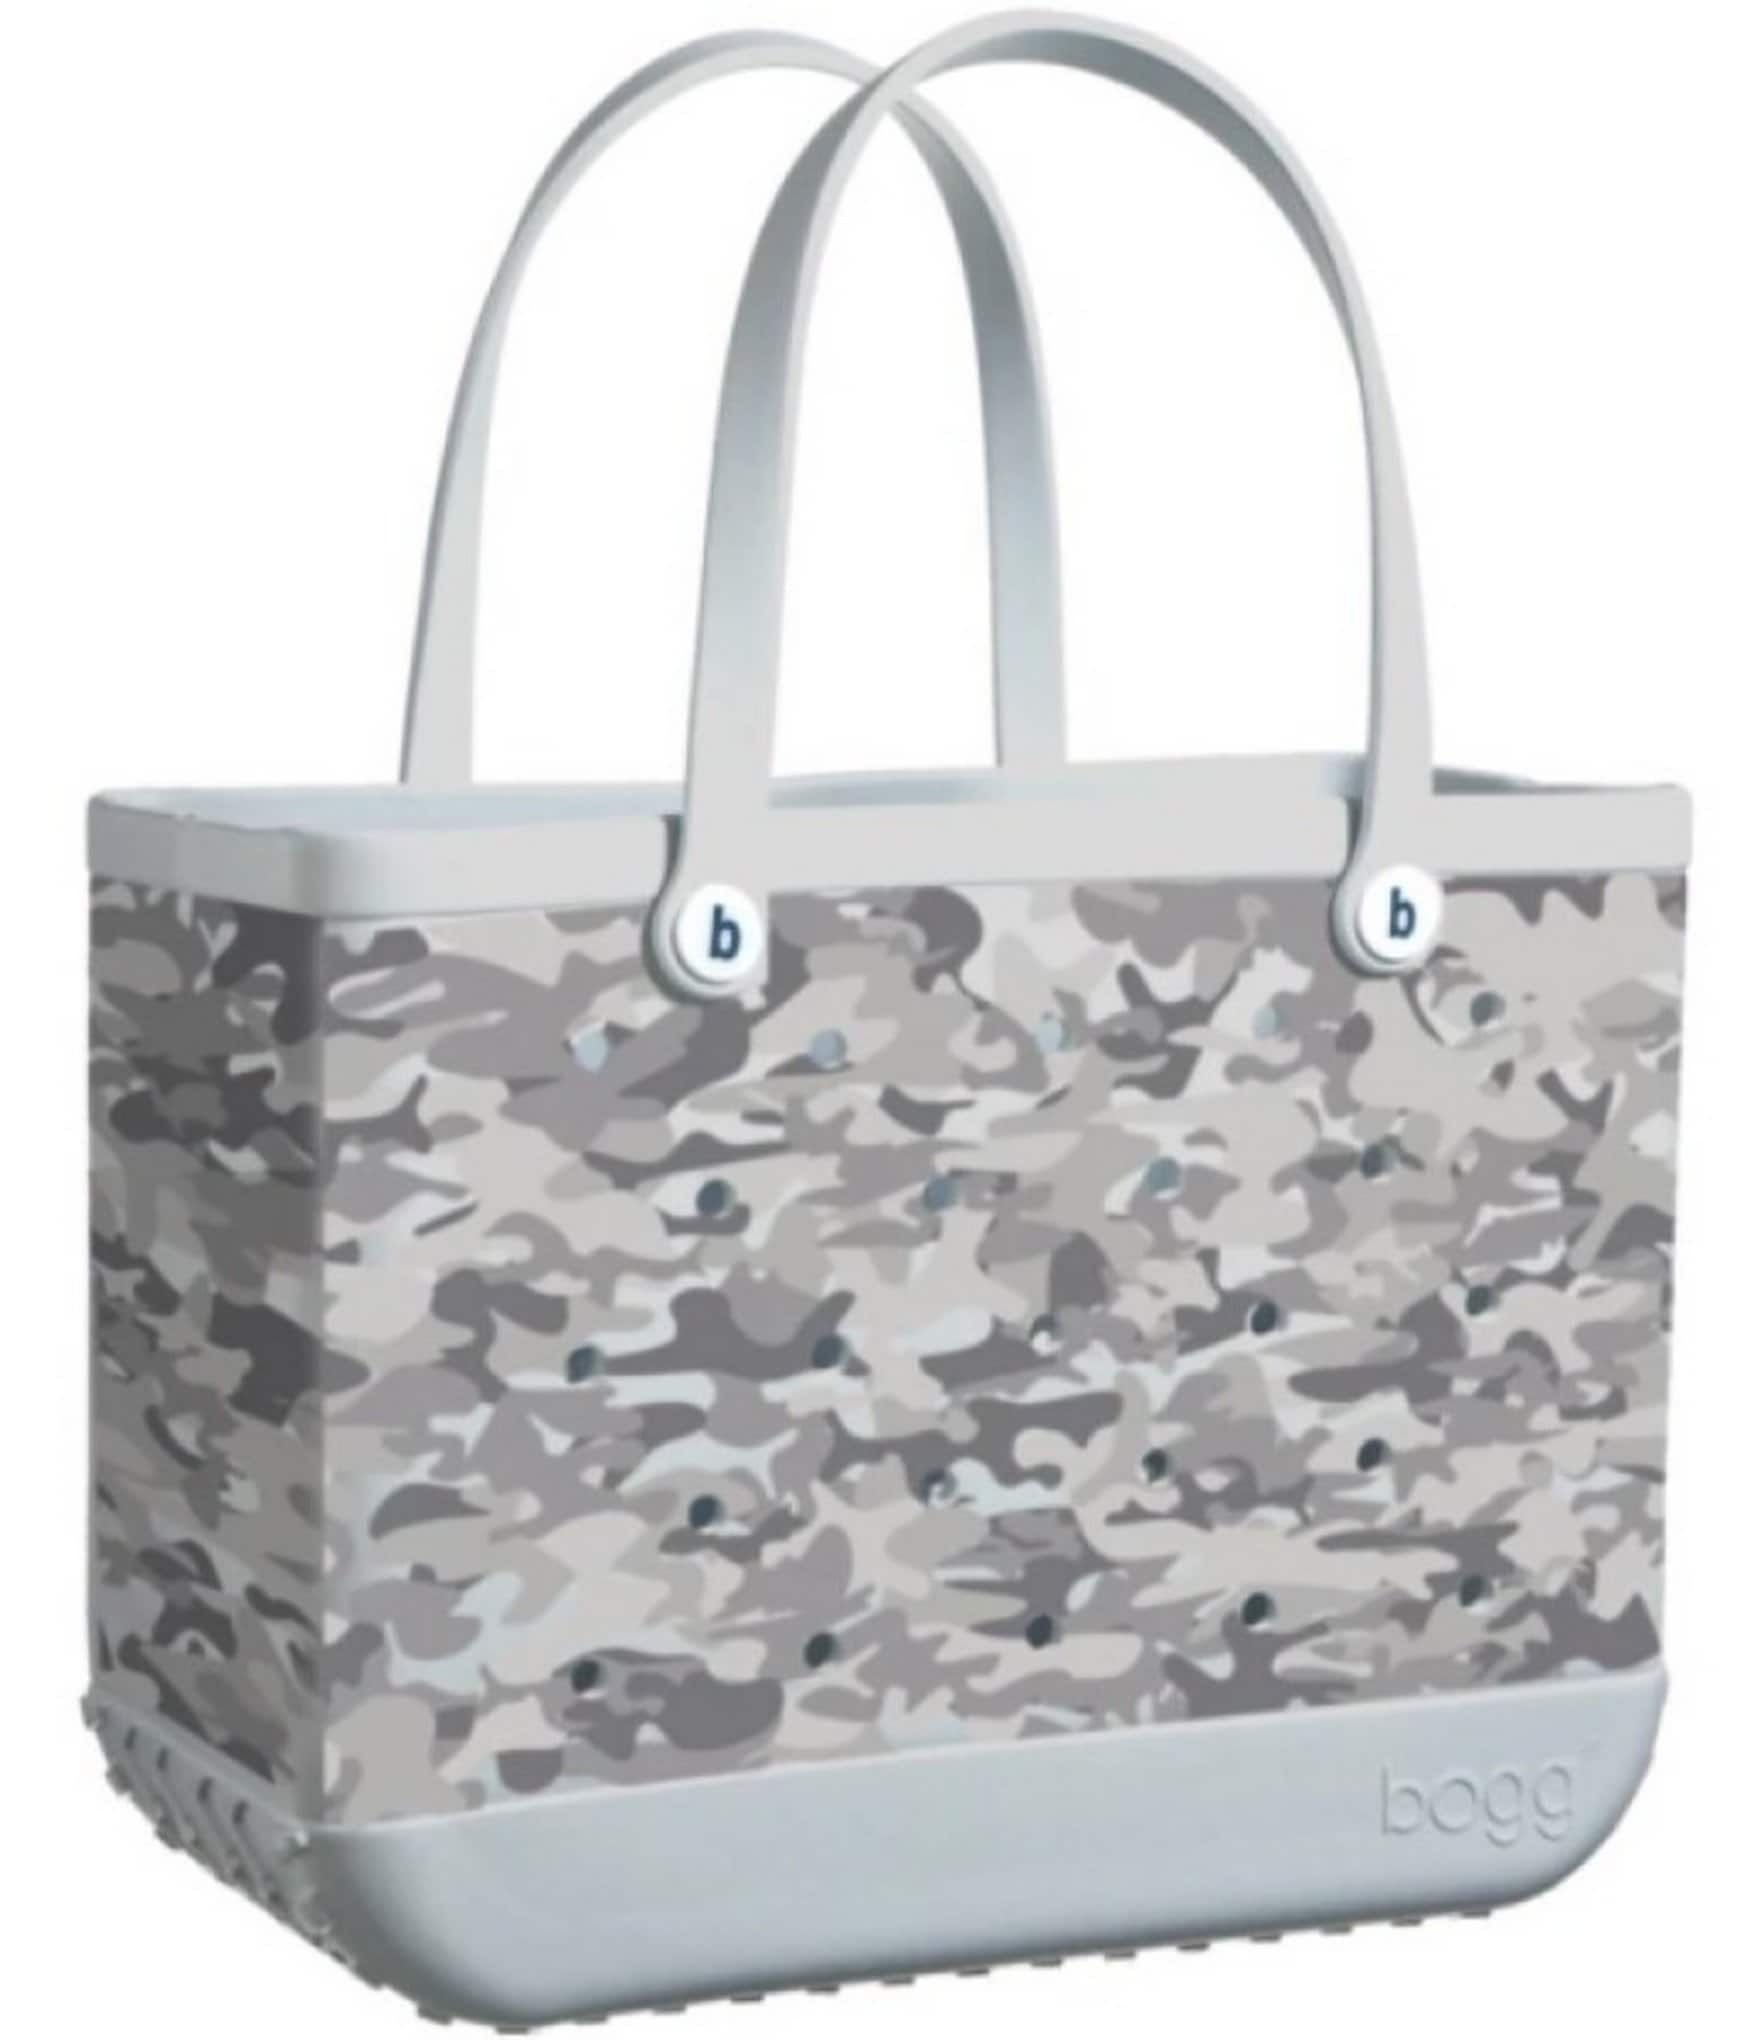 Bogg Bag Original Bogg Bag Grey Camo Tote | Bogg Bags | Dillards